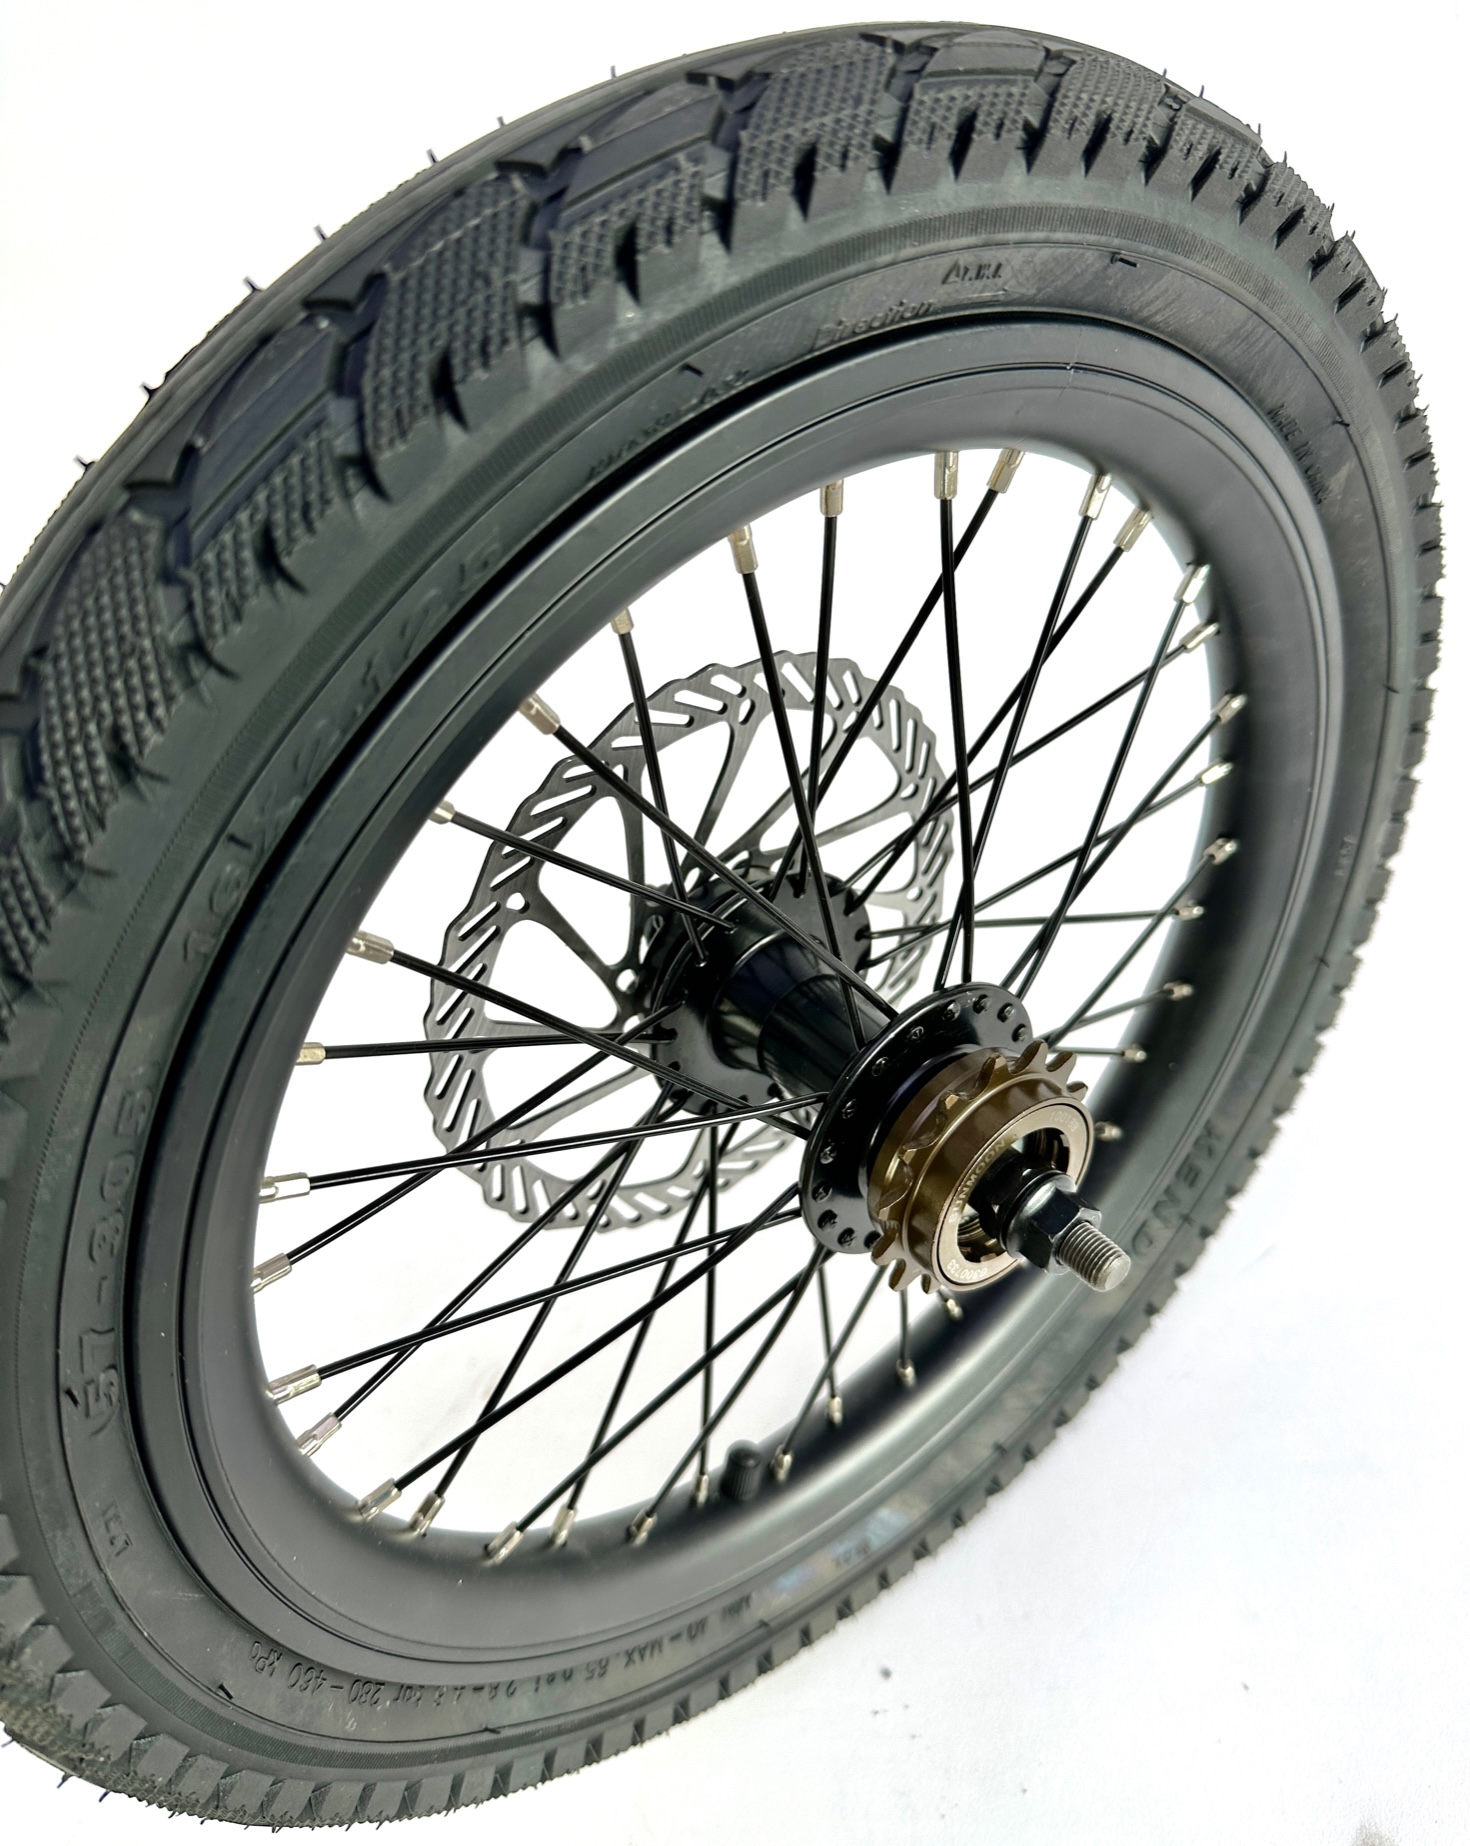 16 inch wheelset aluminium rim with 250W MXUS front wheel motor, 16 x 2.125